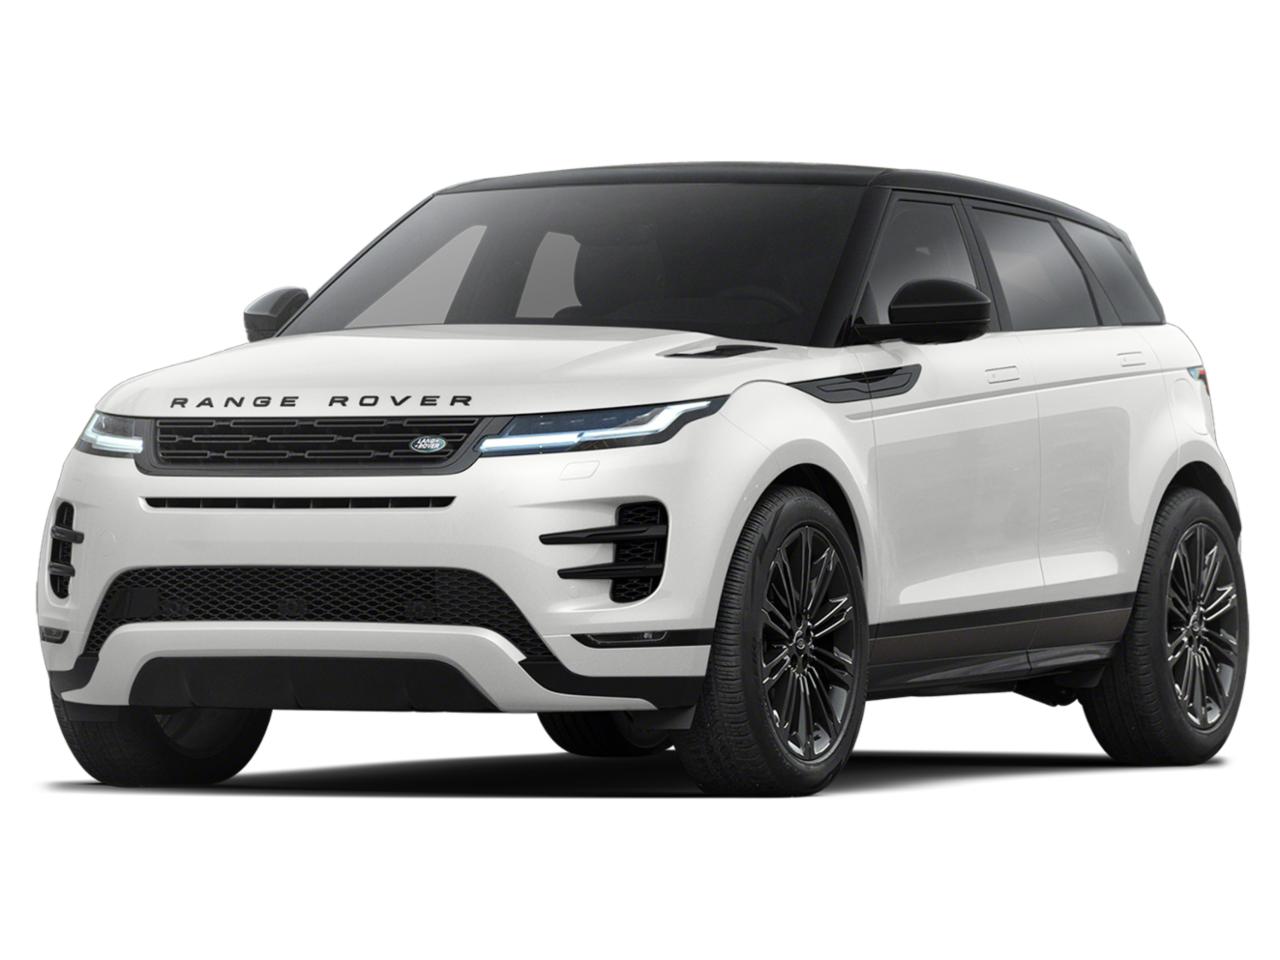 Search New Land Rover Range Rover Evoque Models for Sale in Dallas